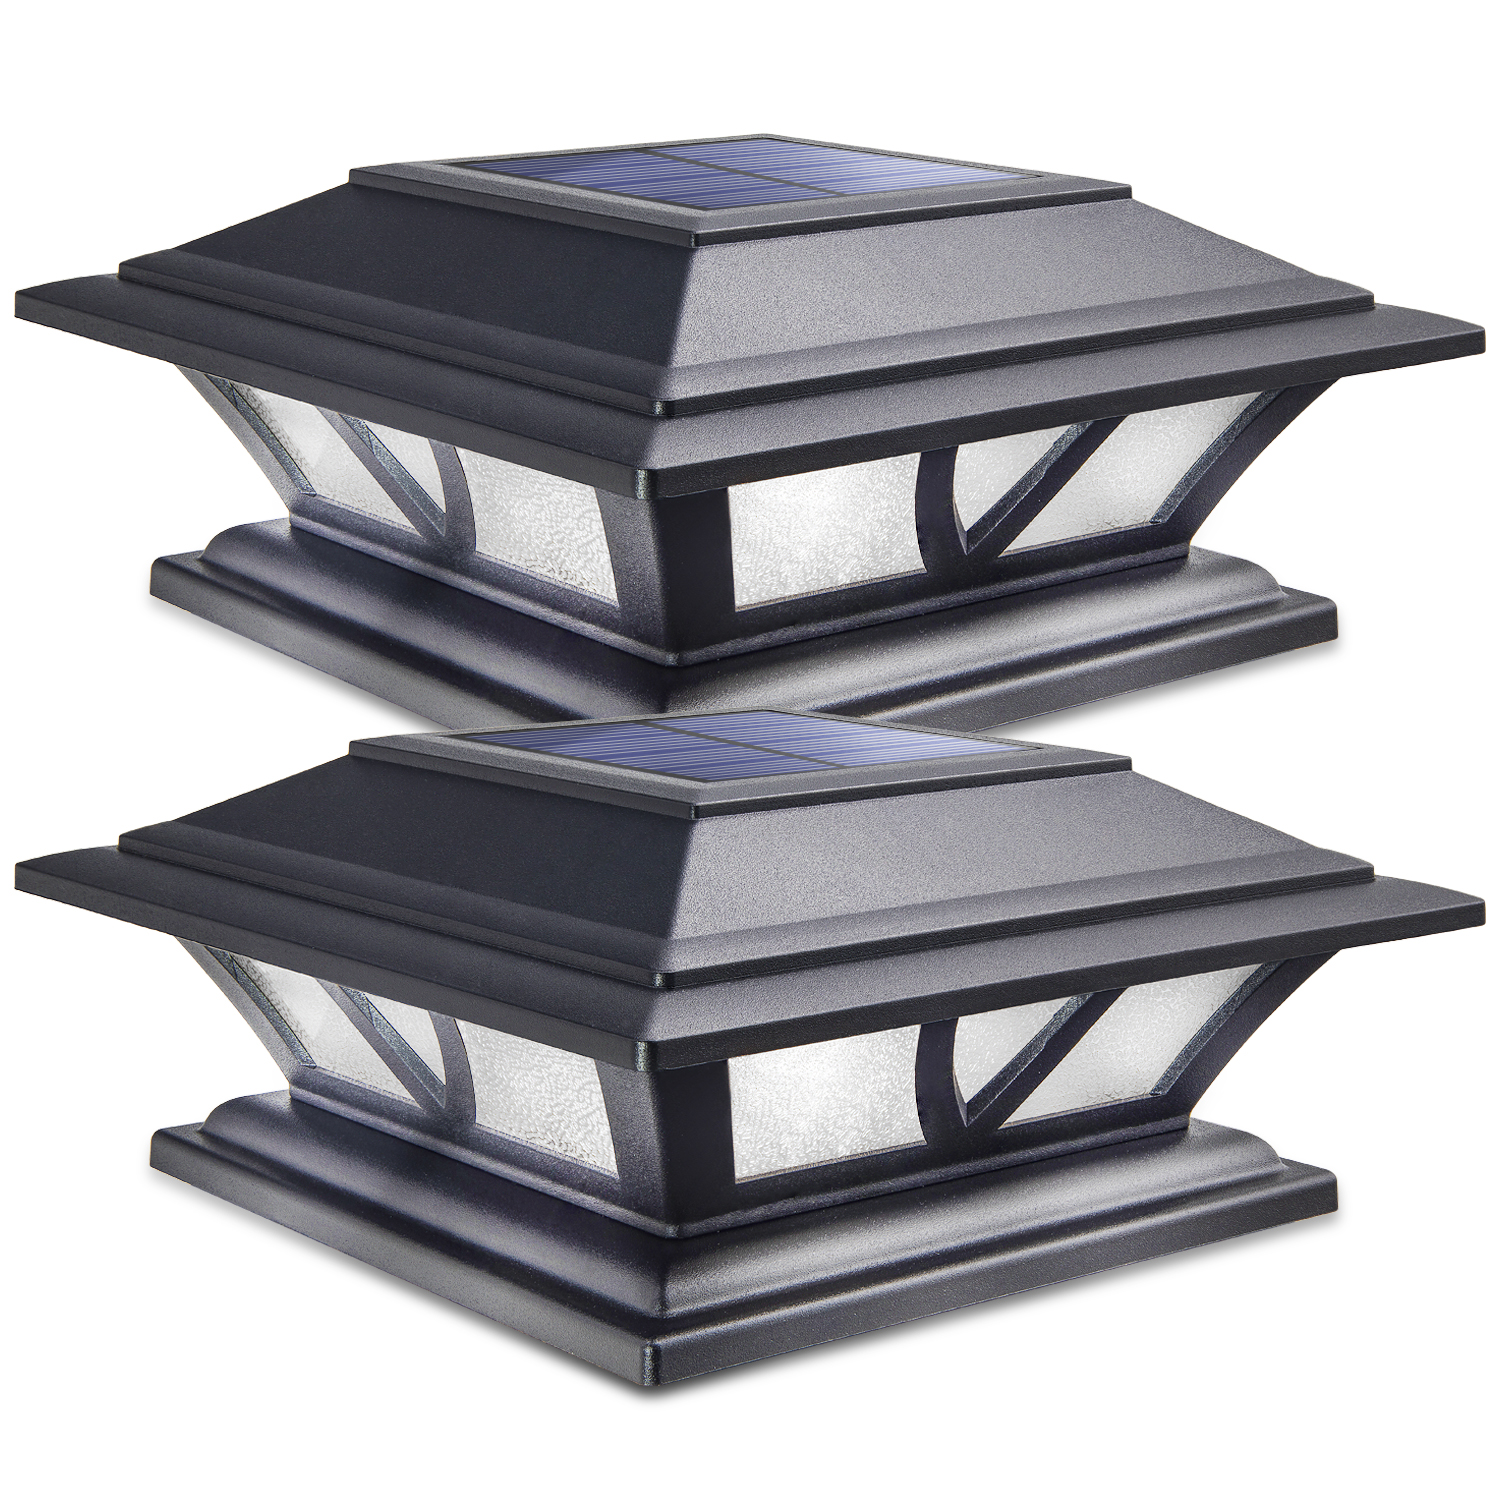 Siedinlar 2-Pack Solar Post Cap Lights 2 Modes Black for 4x4 5x5 6x6 Posts $17.49 + Free Shipping